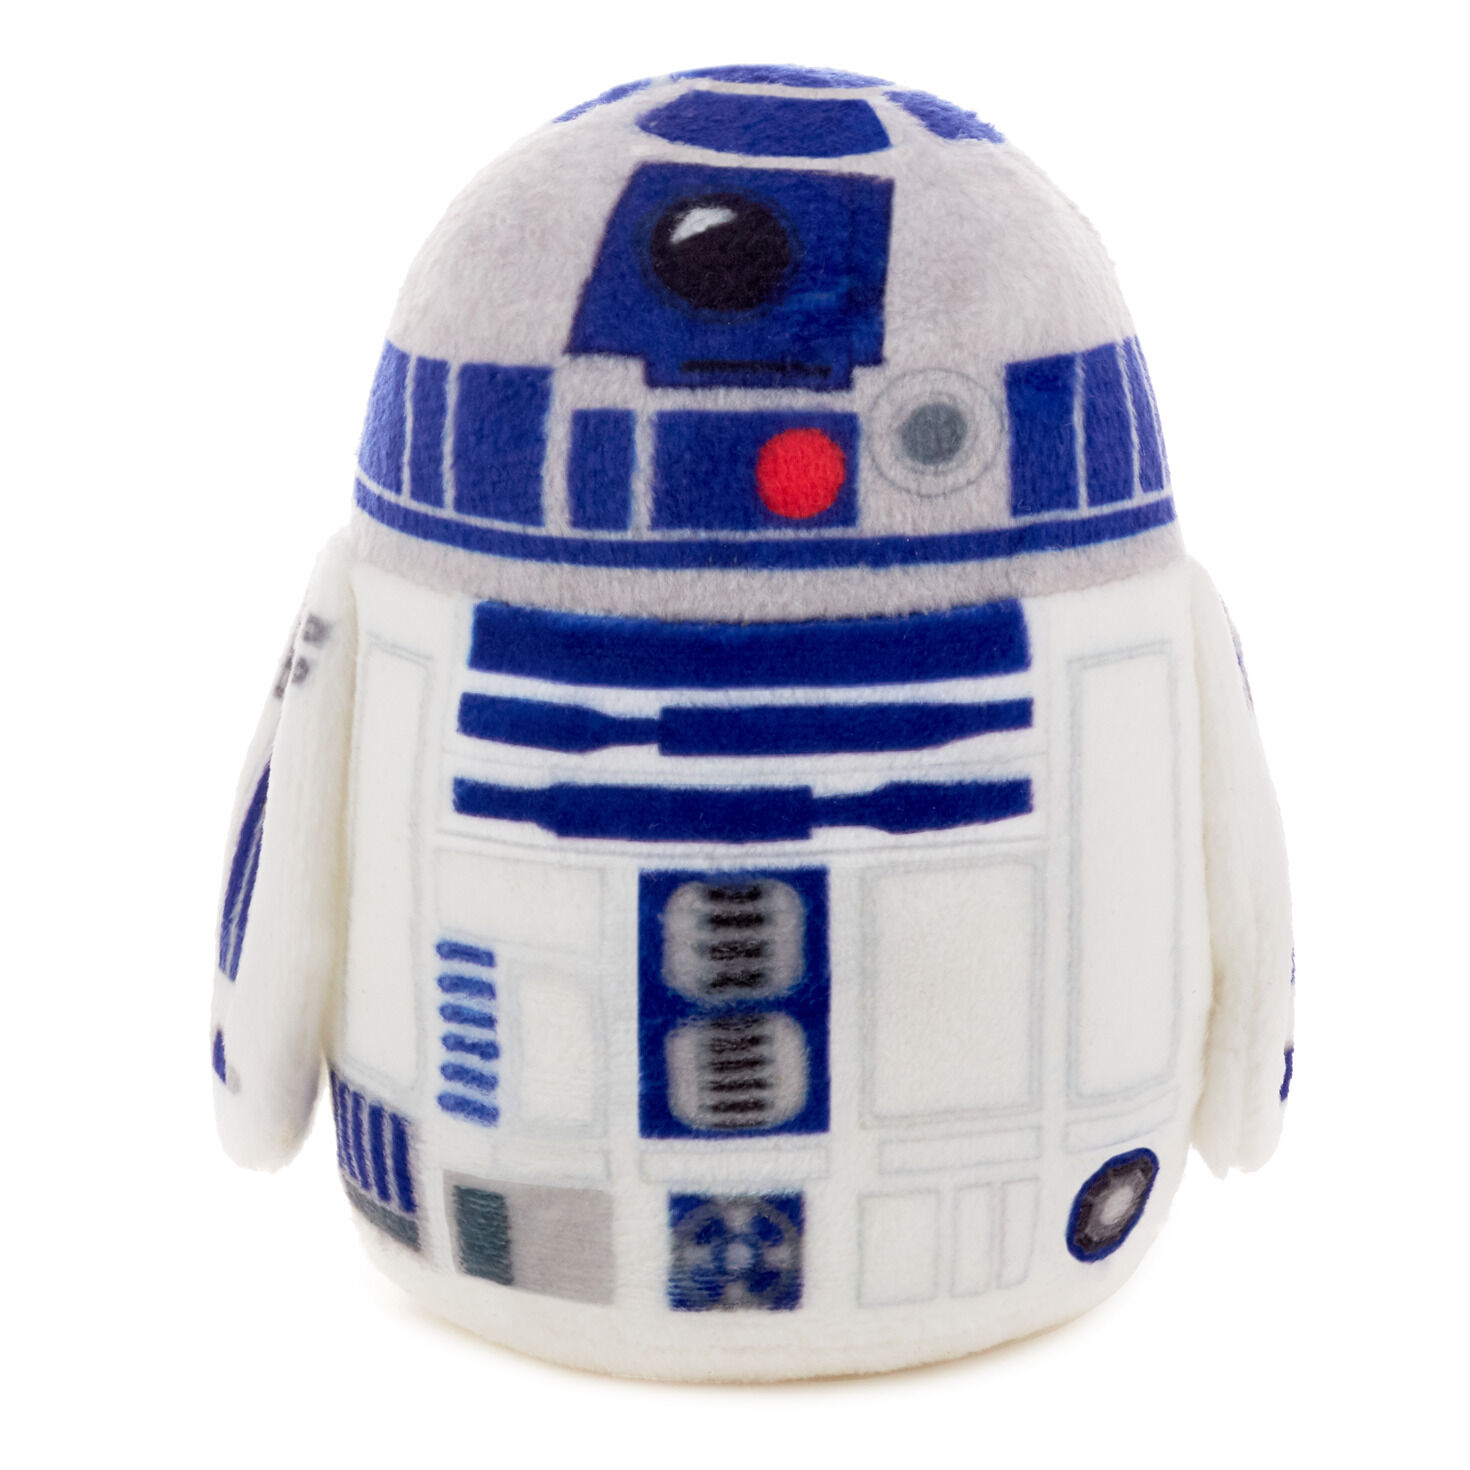 Hallmark Itty Bittys Star Wars R2-D2